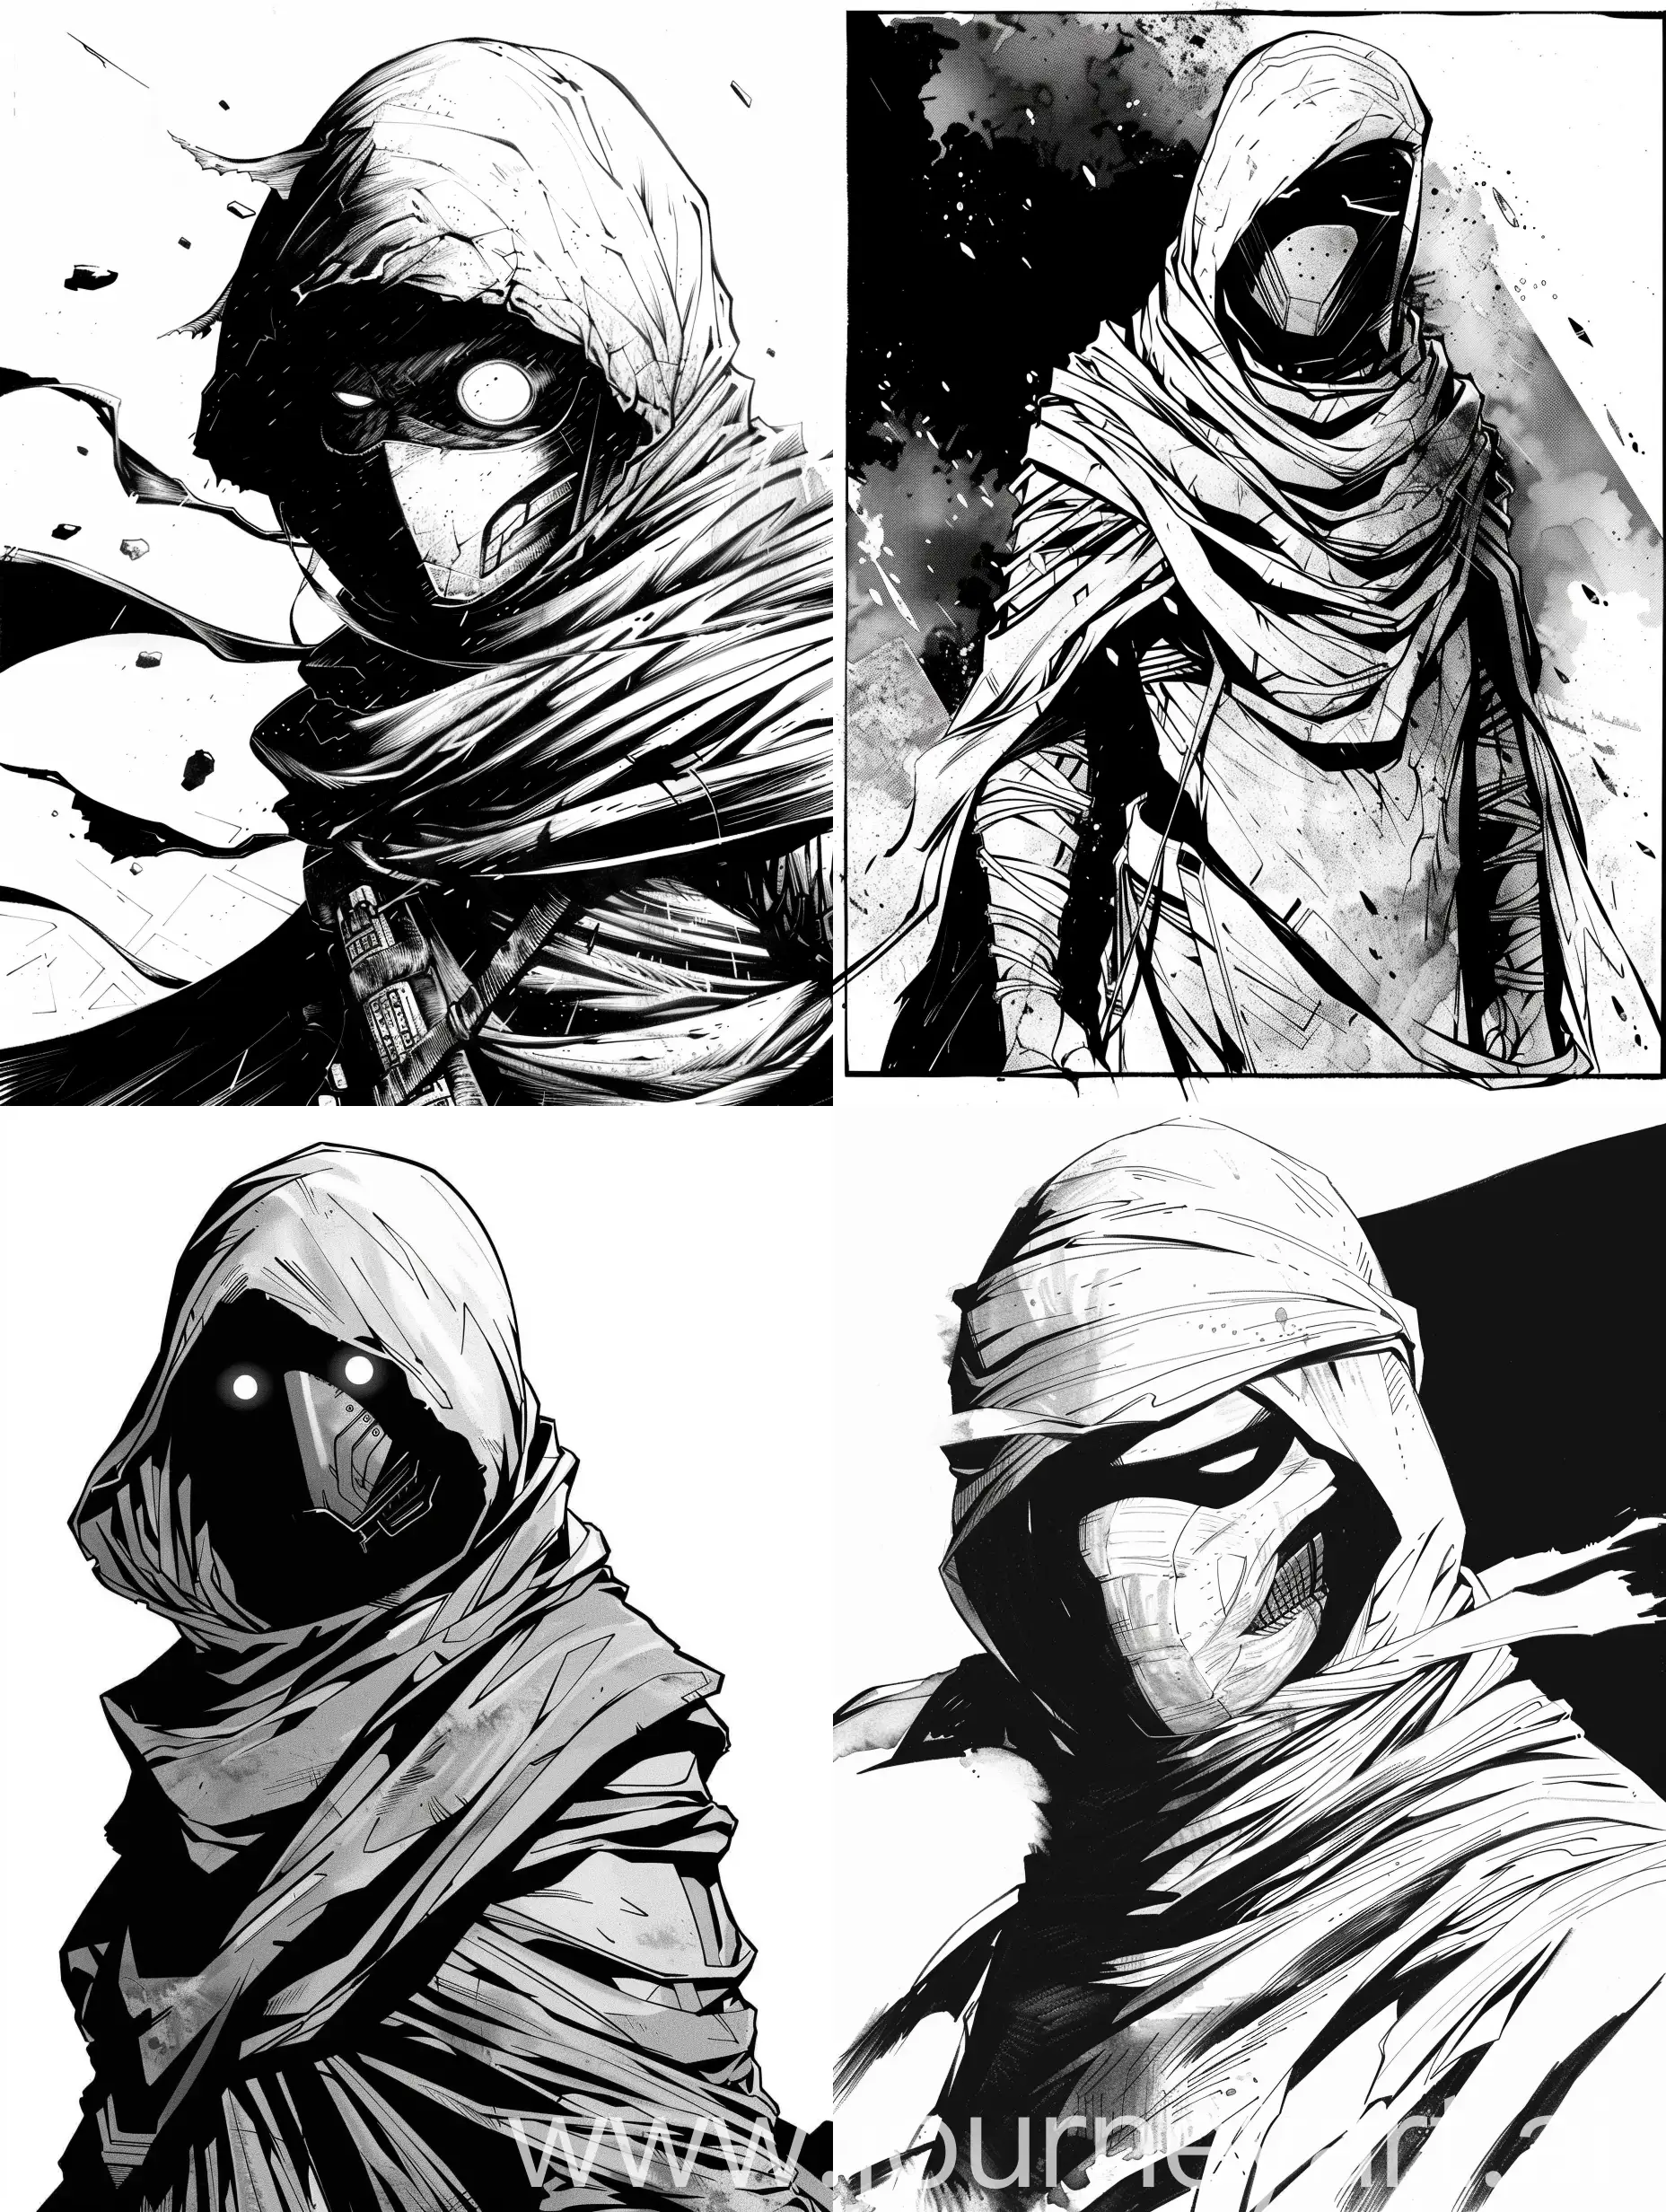 Dark-Lord-Manga-Art-SciFi-Ranger-in-Wraps-and-Hood-with-Eyeless-Mask